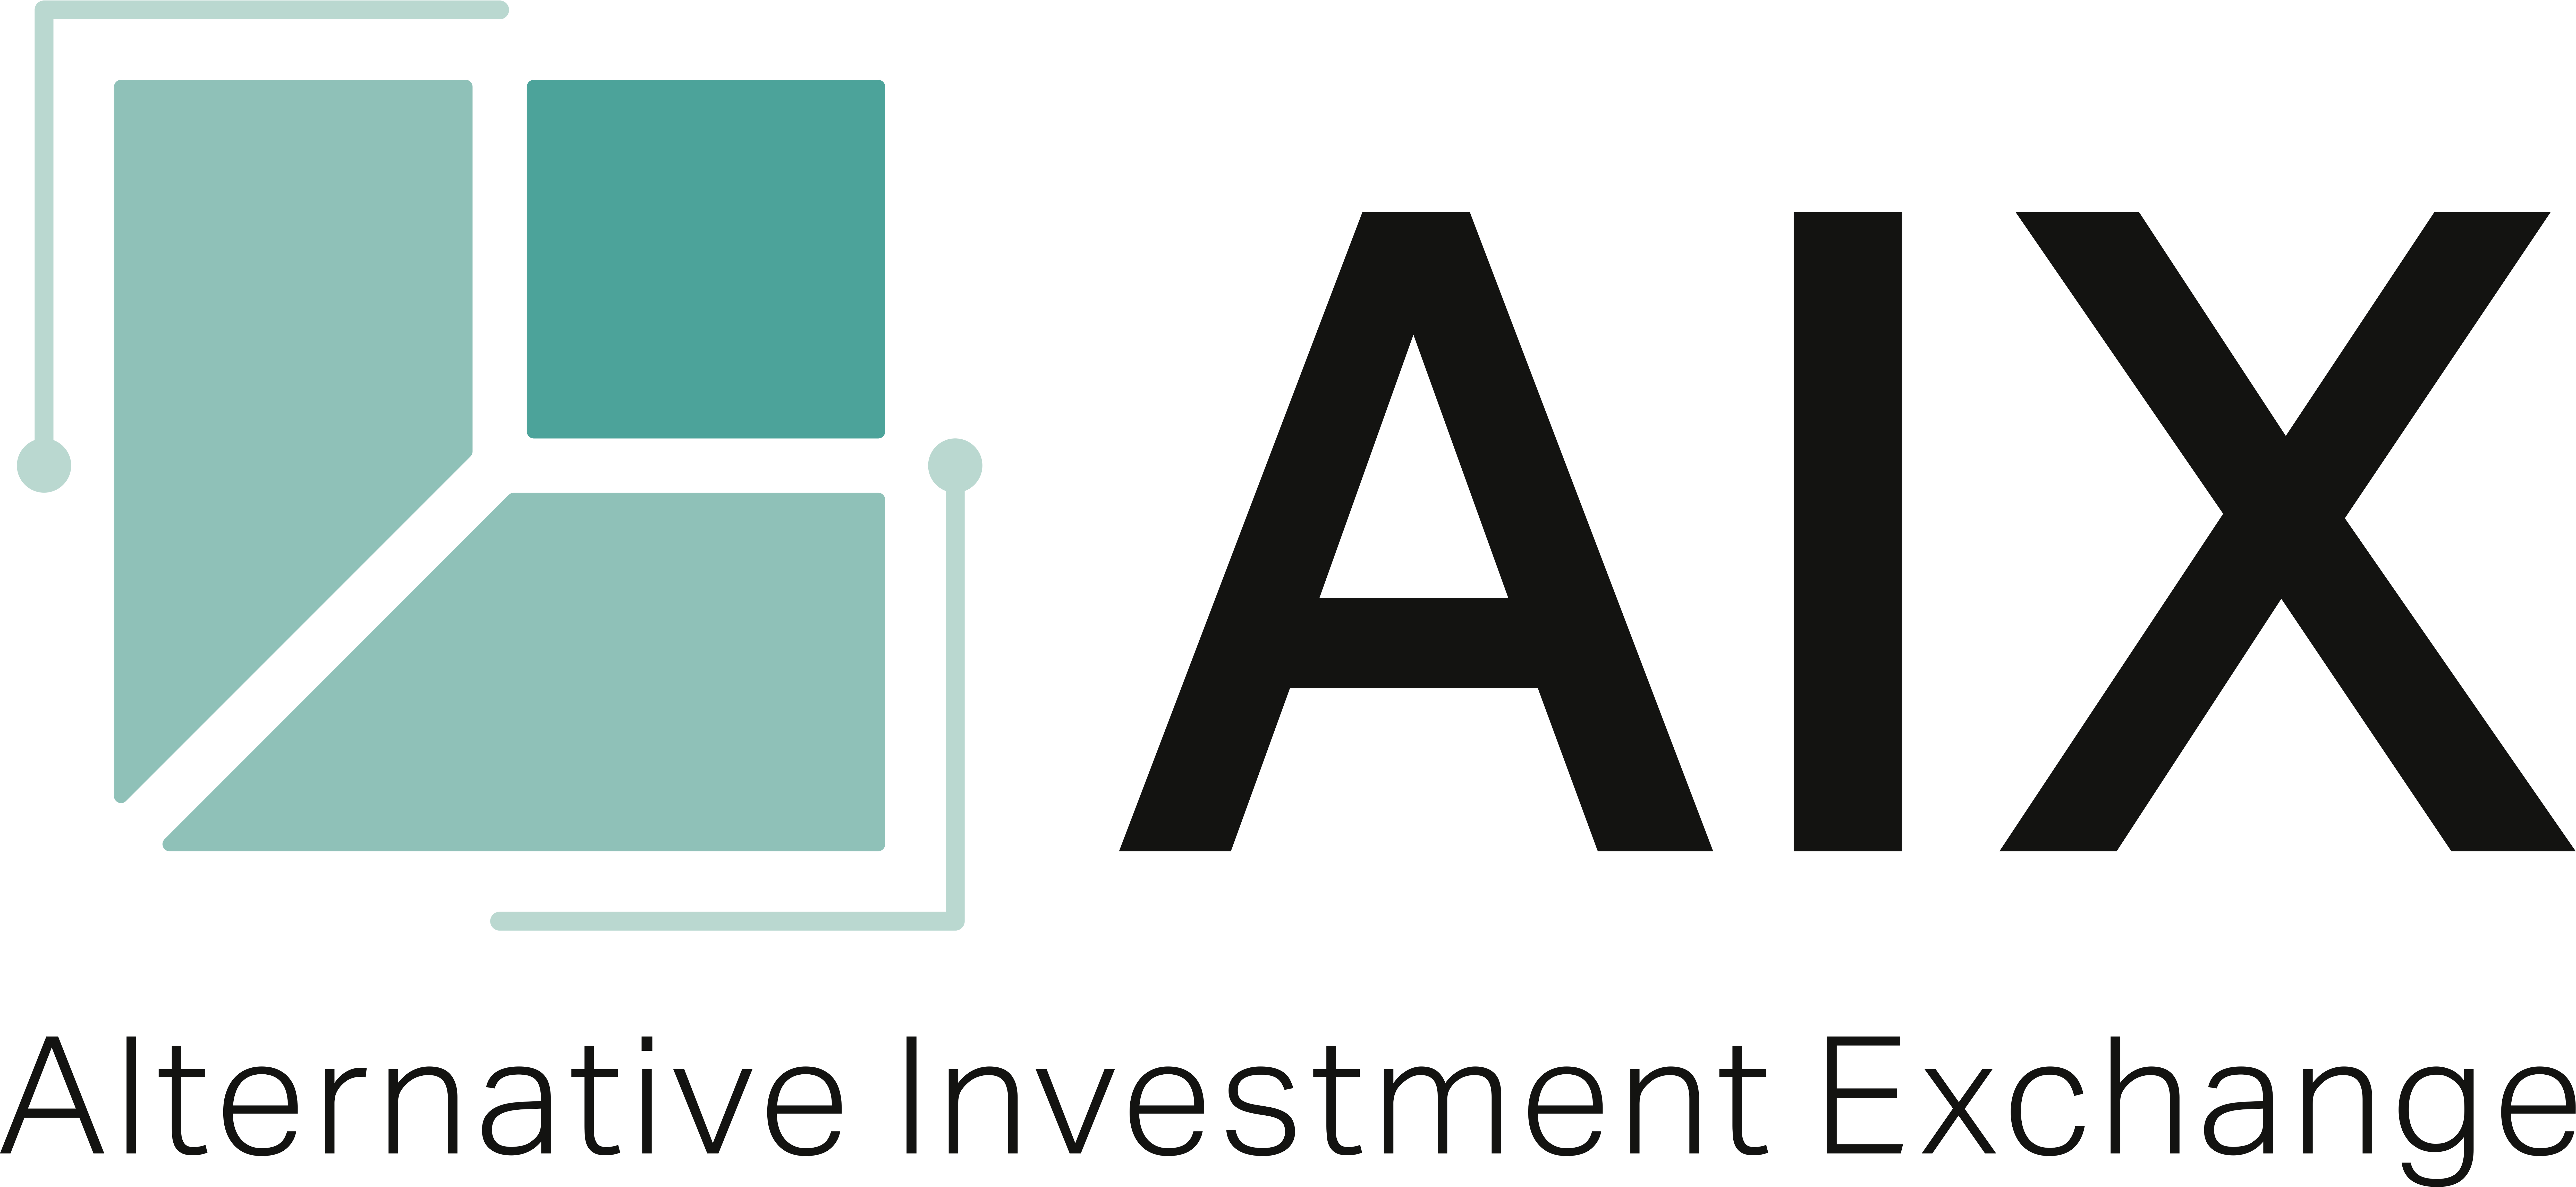 AIX Exchange logo